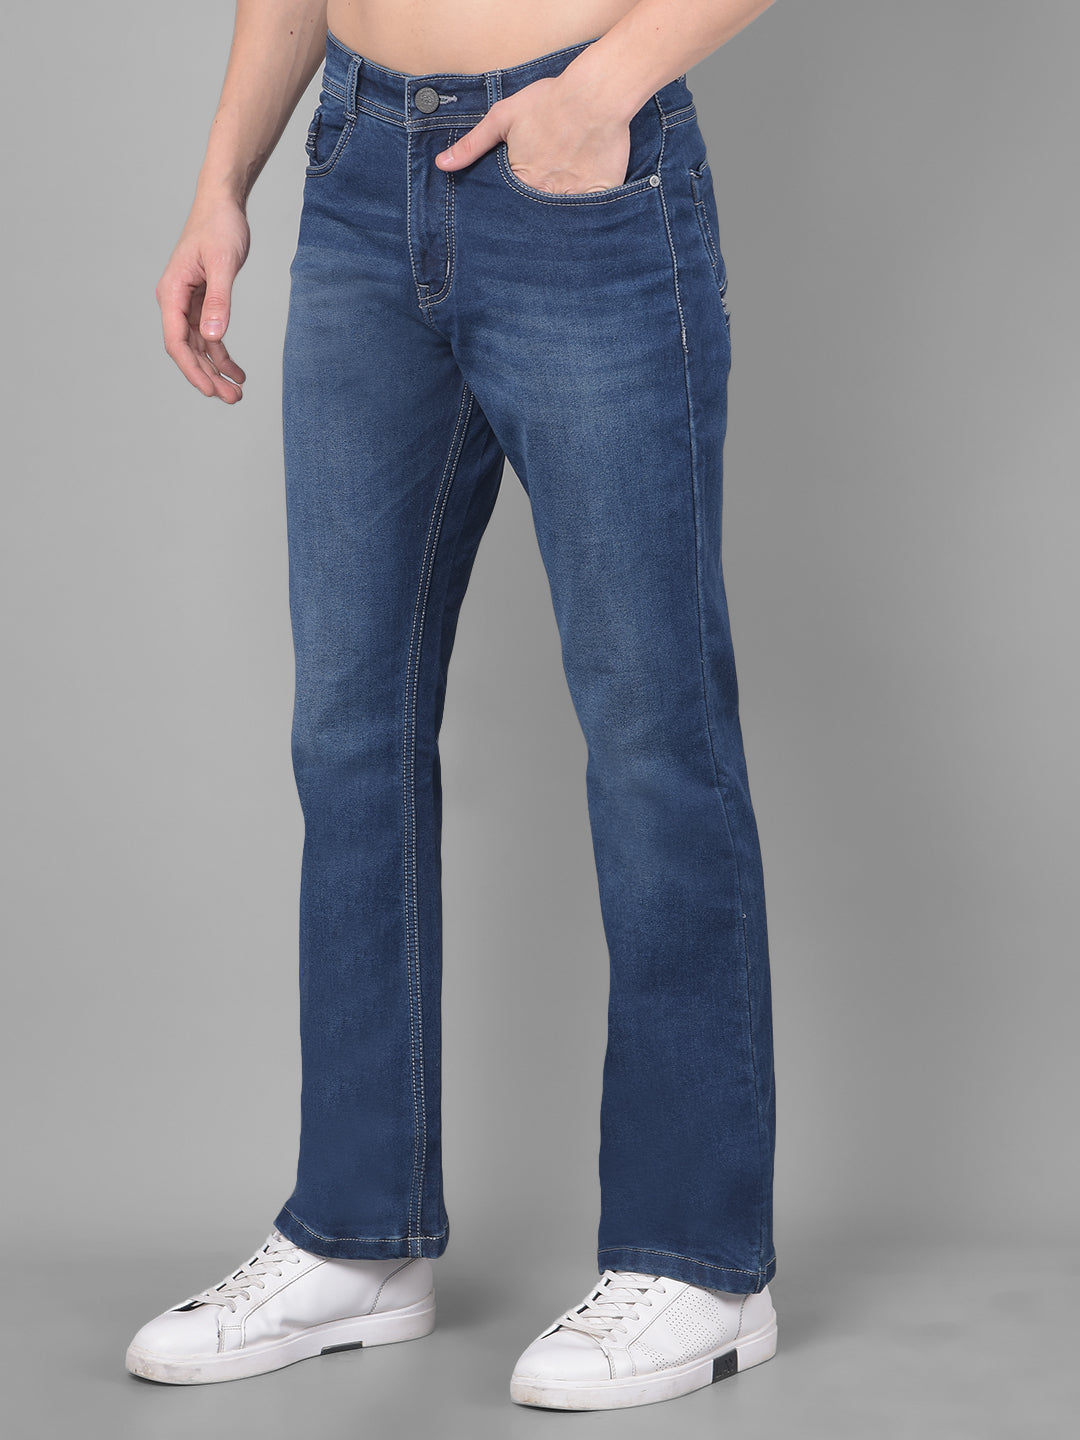 Jeans for Men, Buy Best Mens Denim Jeans